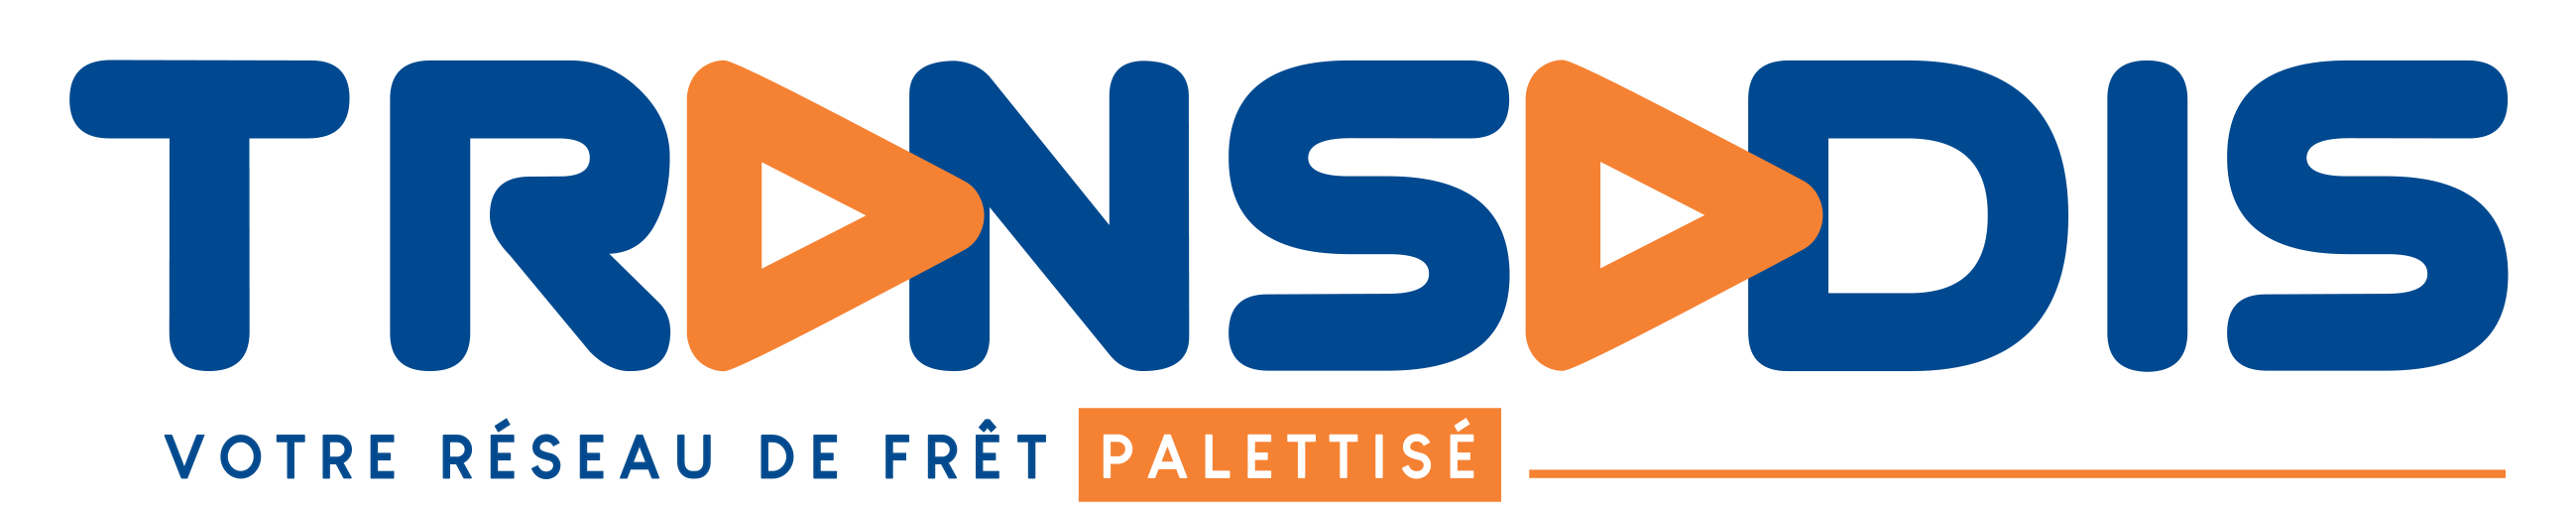 Transadis logo